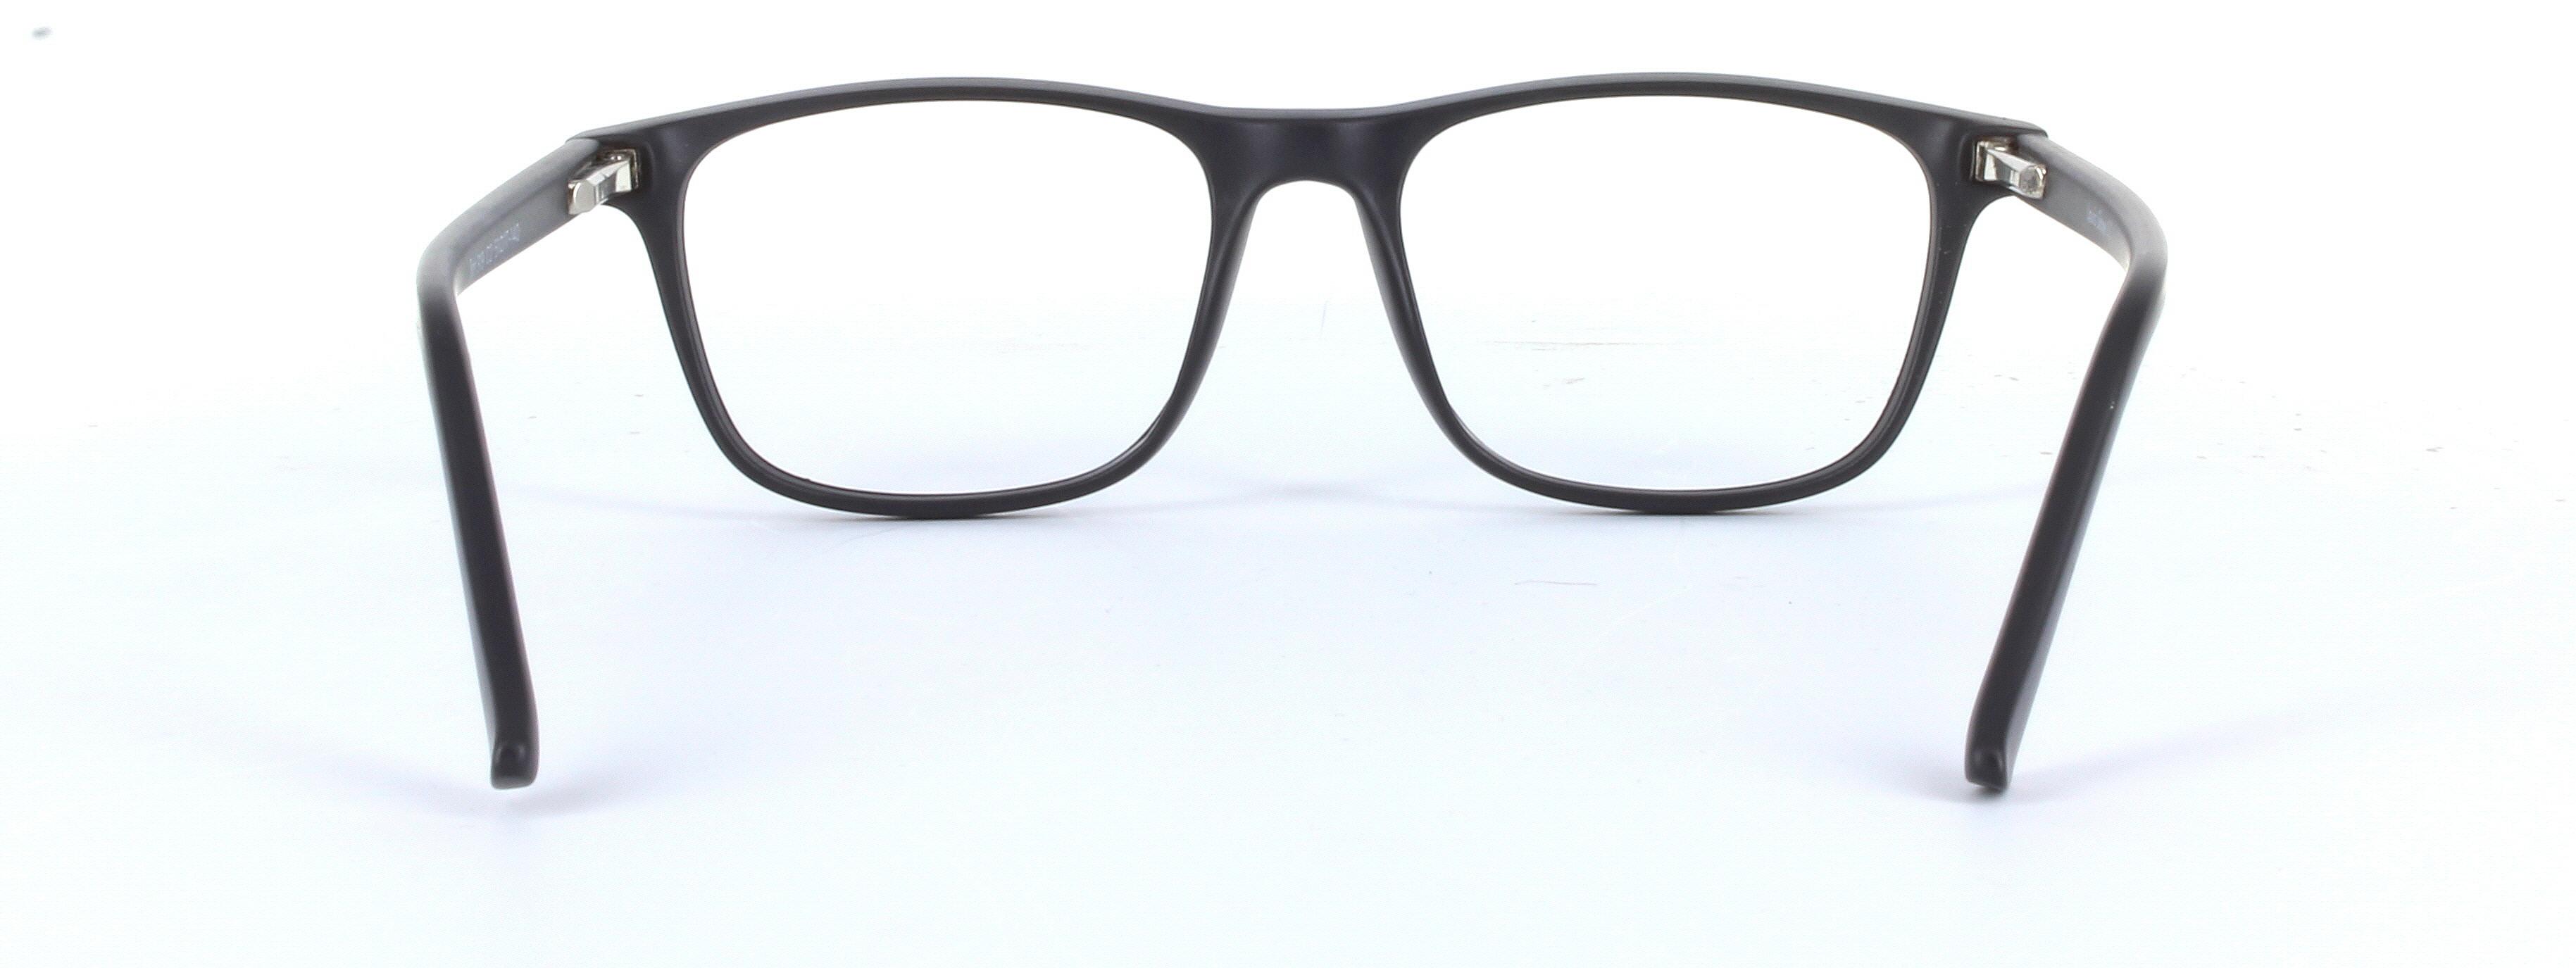 Consul Grey Full Rim Oval Round Plastic Glasses - Image View 3